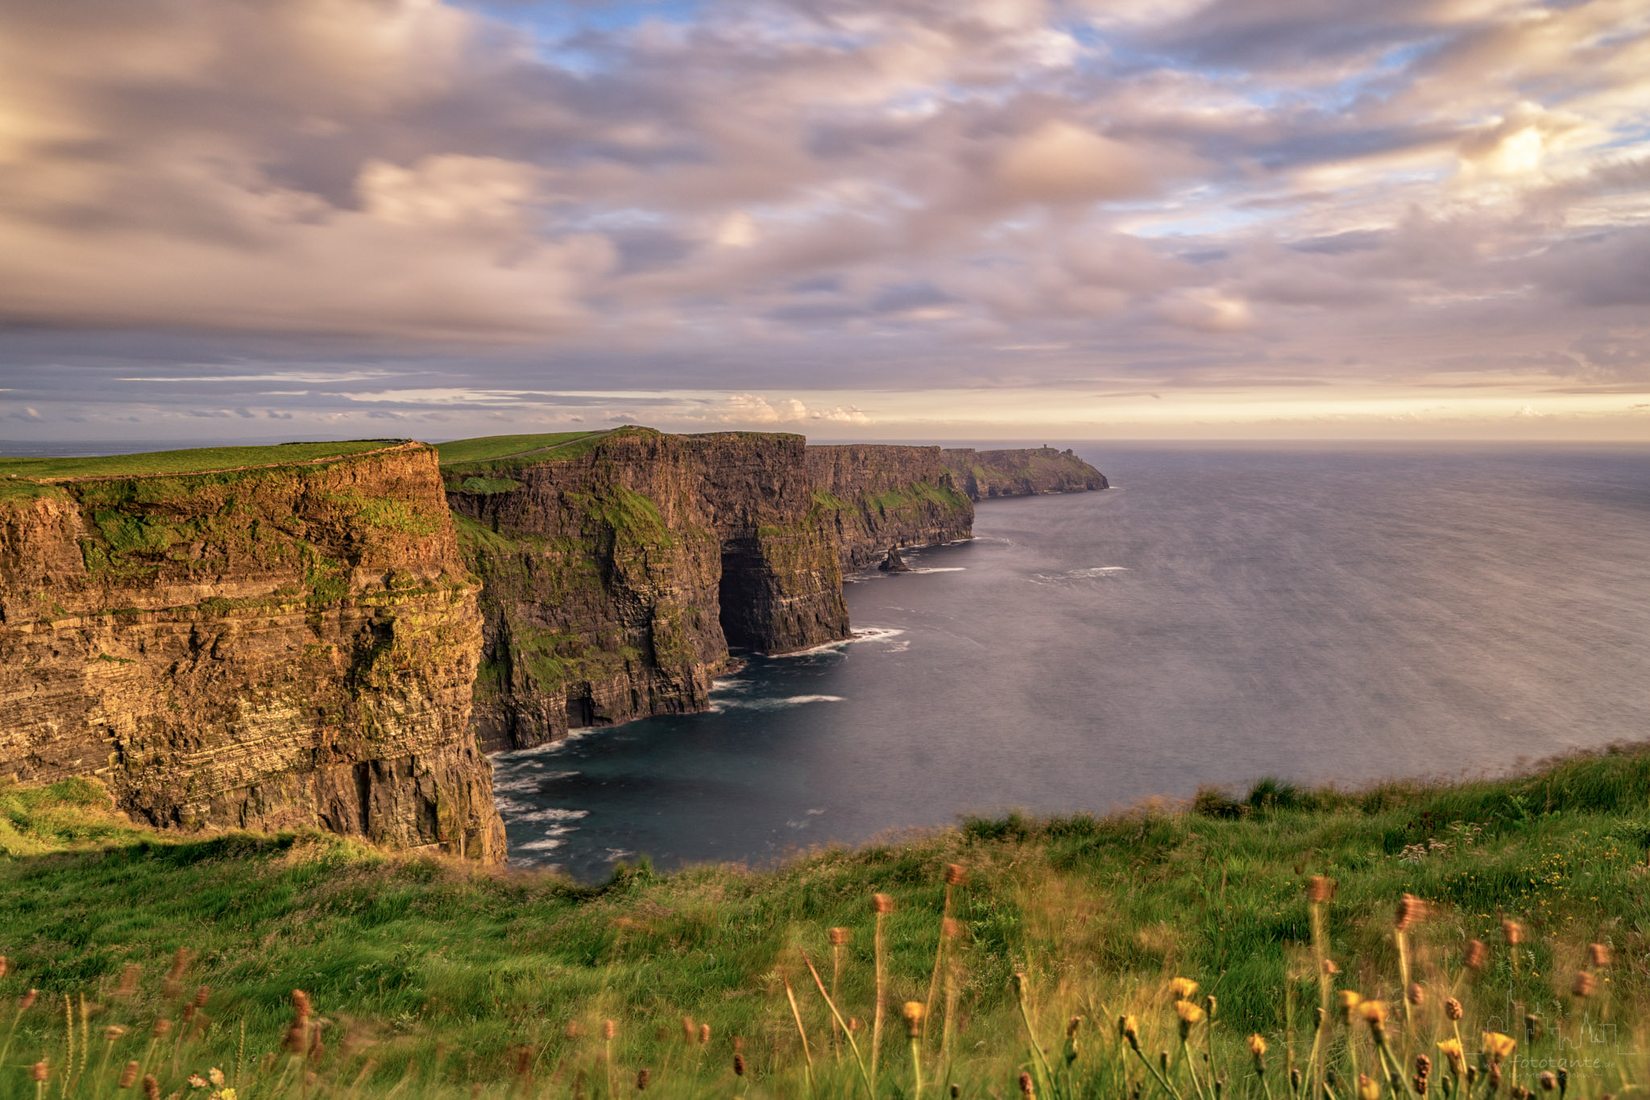 Cliffs of Moher view, Ireland